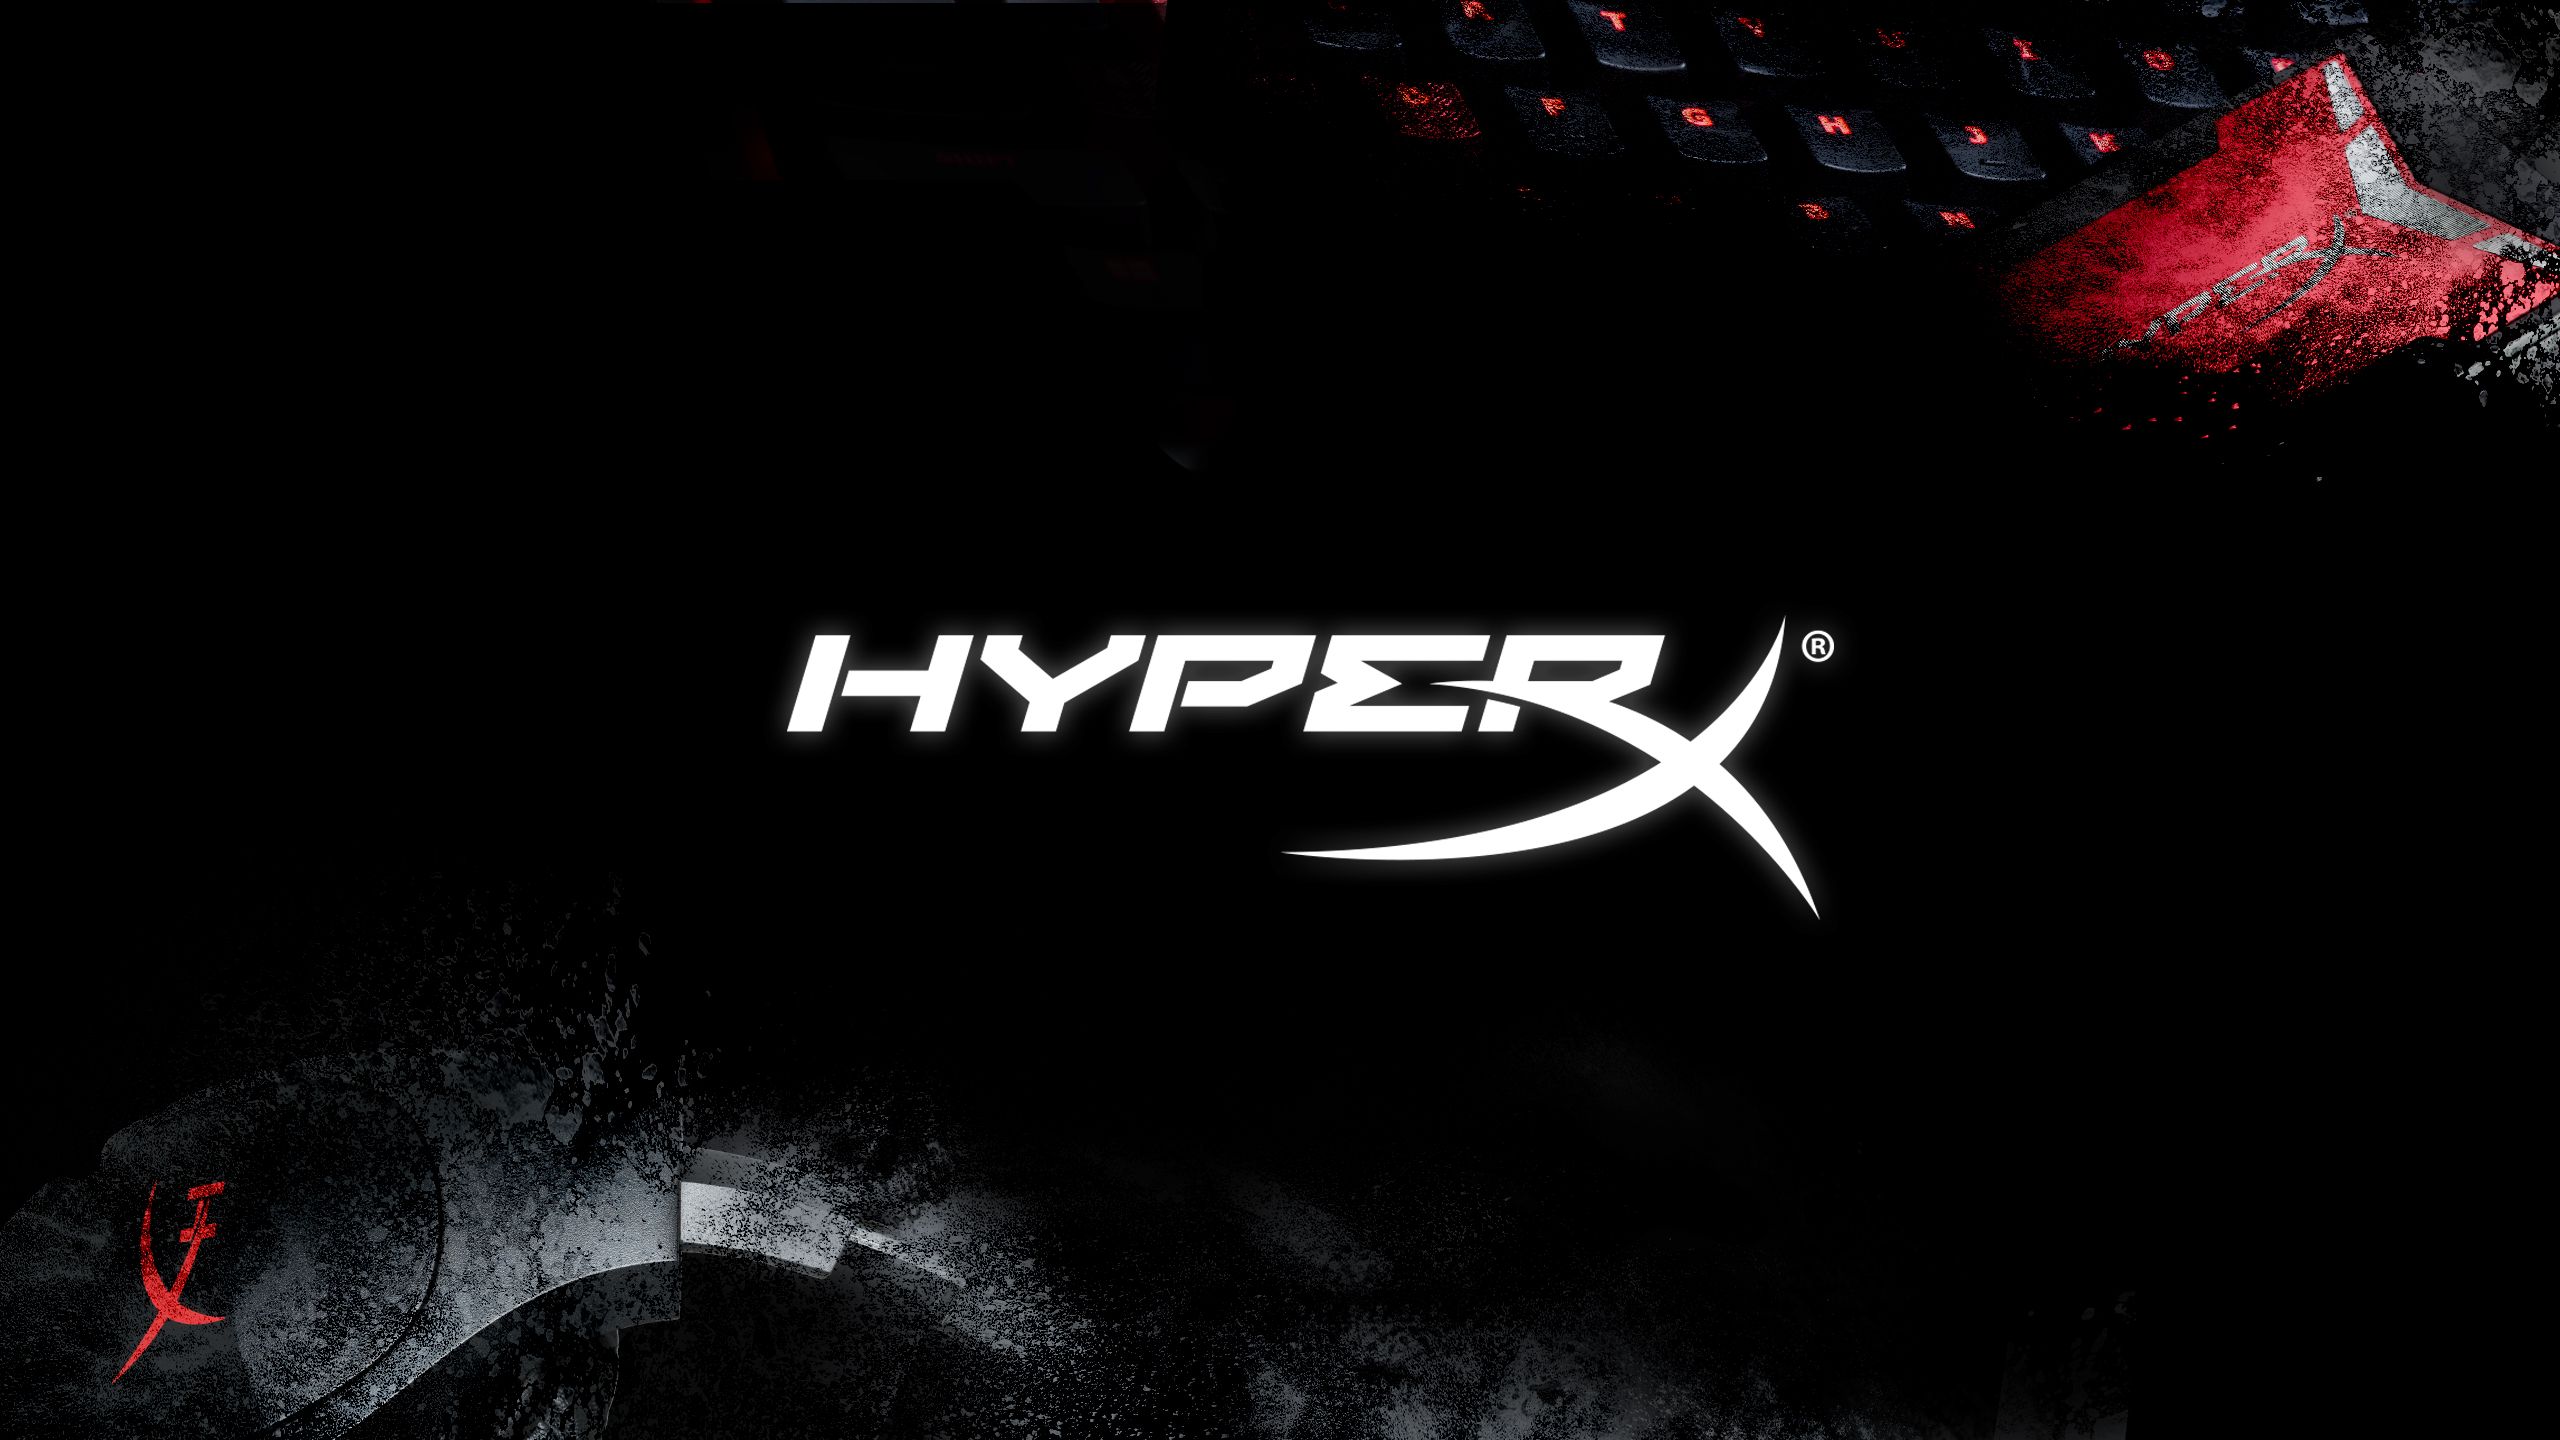 HYPERX logo 4k